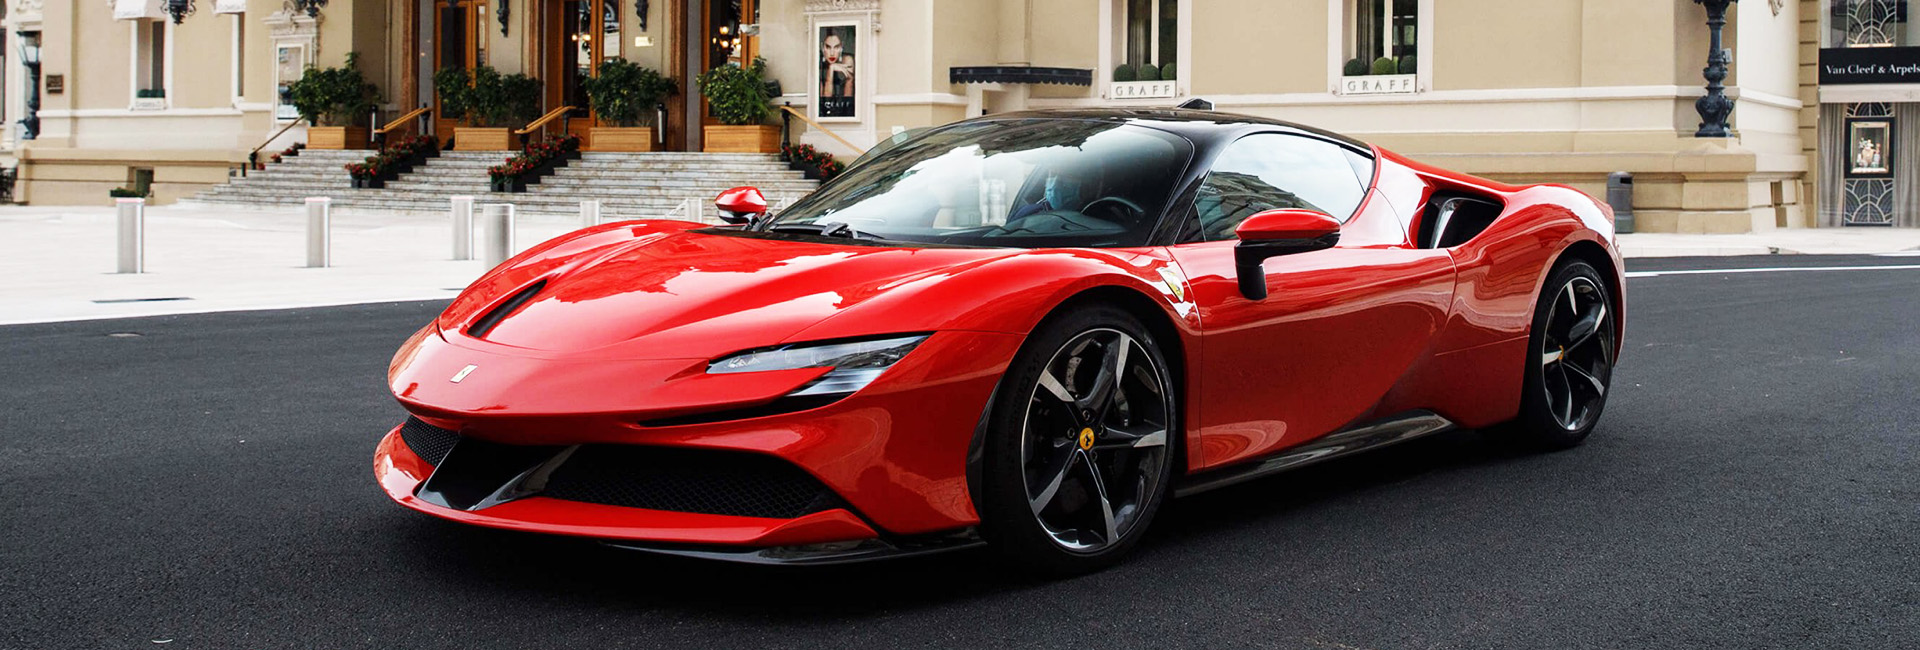 Starr Luxury Ferrari Hire UK